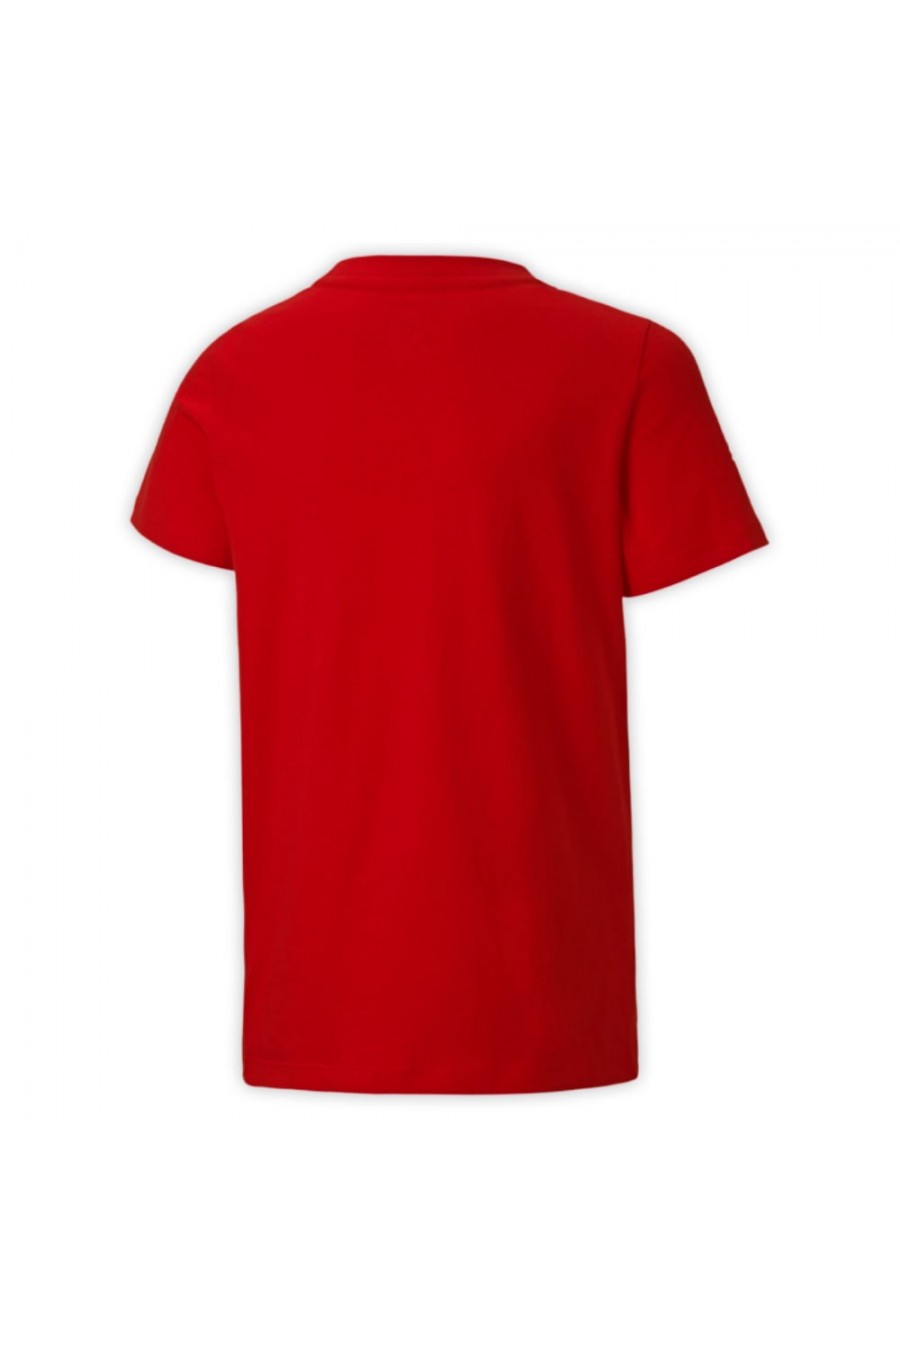 Scuderia Ferrari Renn-T-Shirt